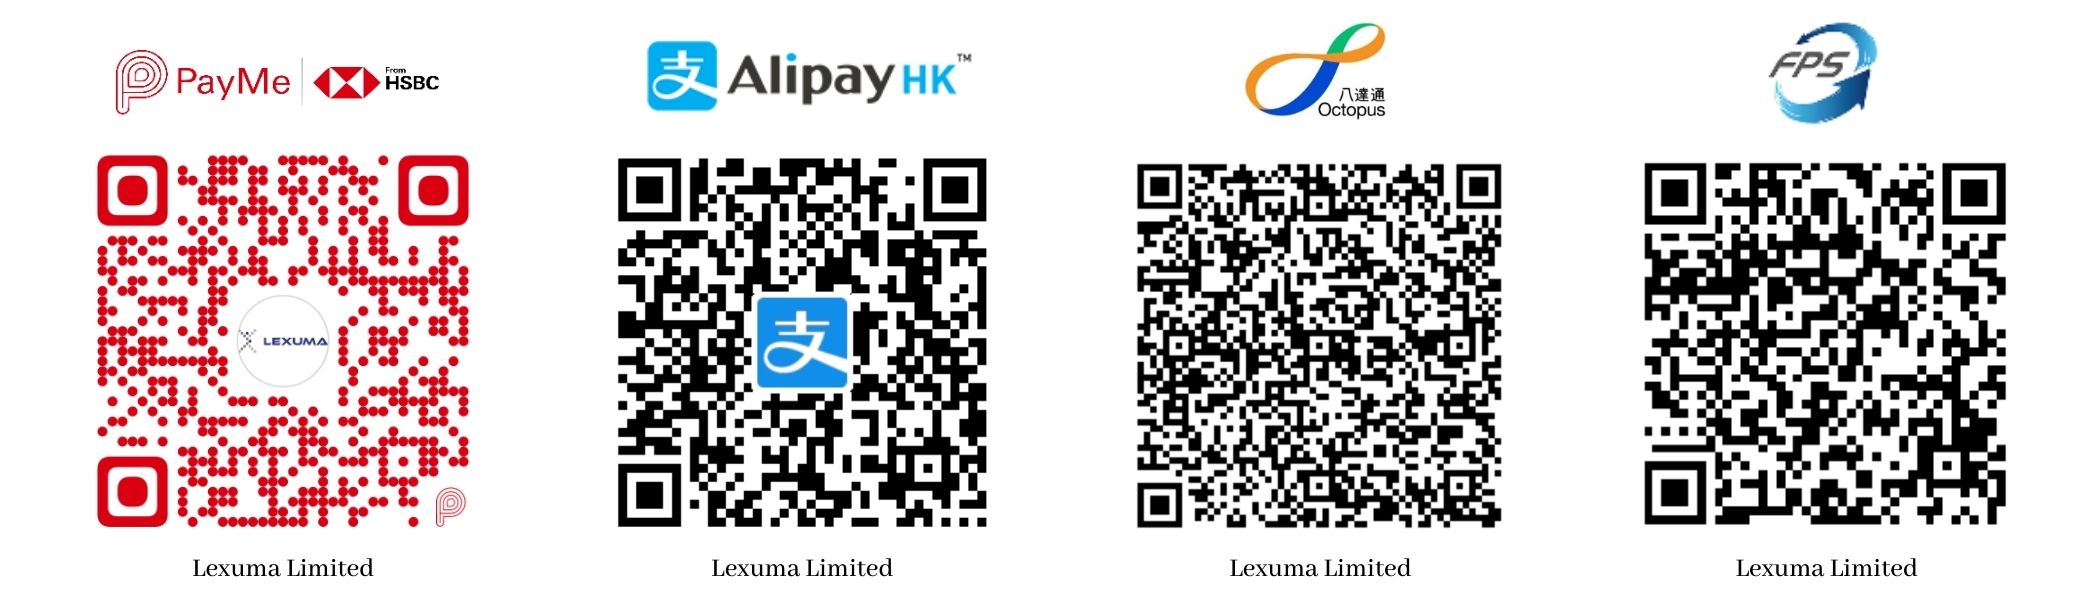 dimbuyshop payment code for digital payment